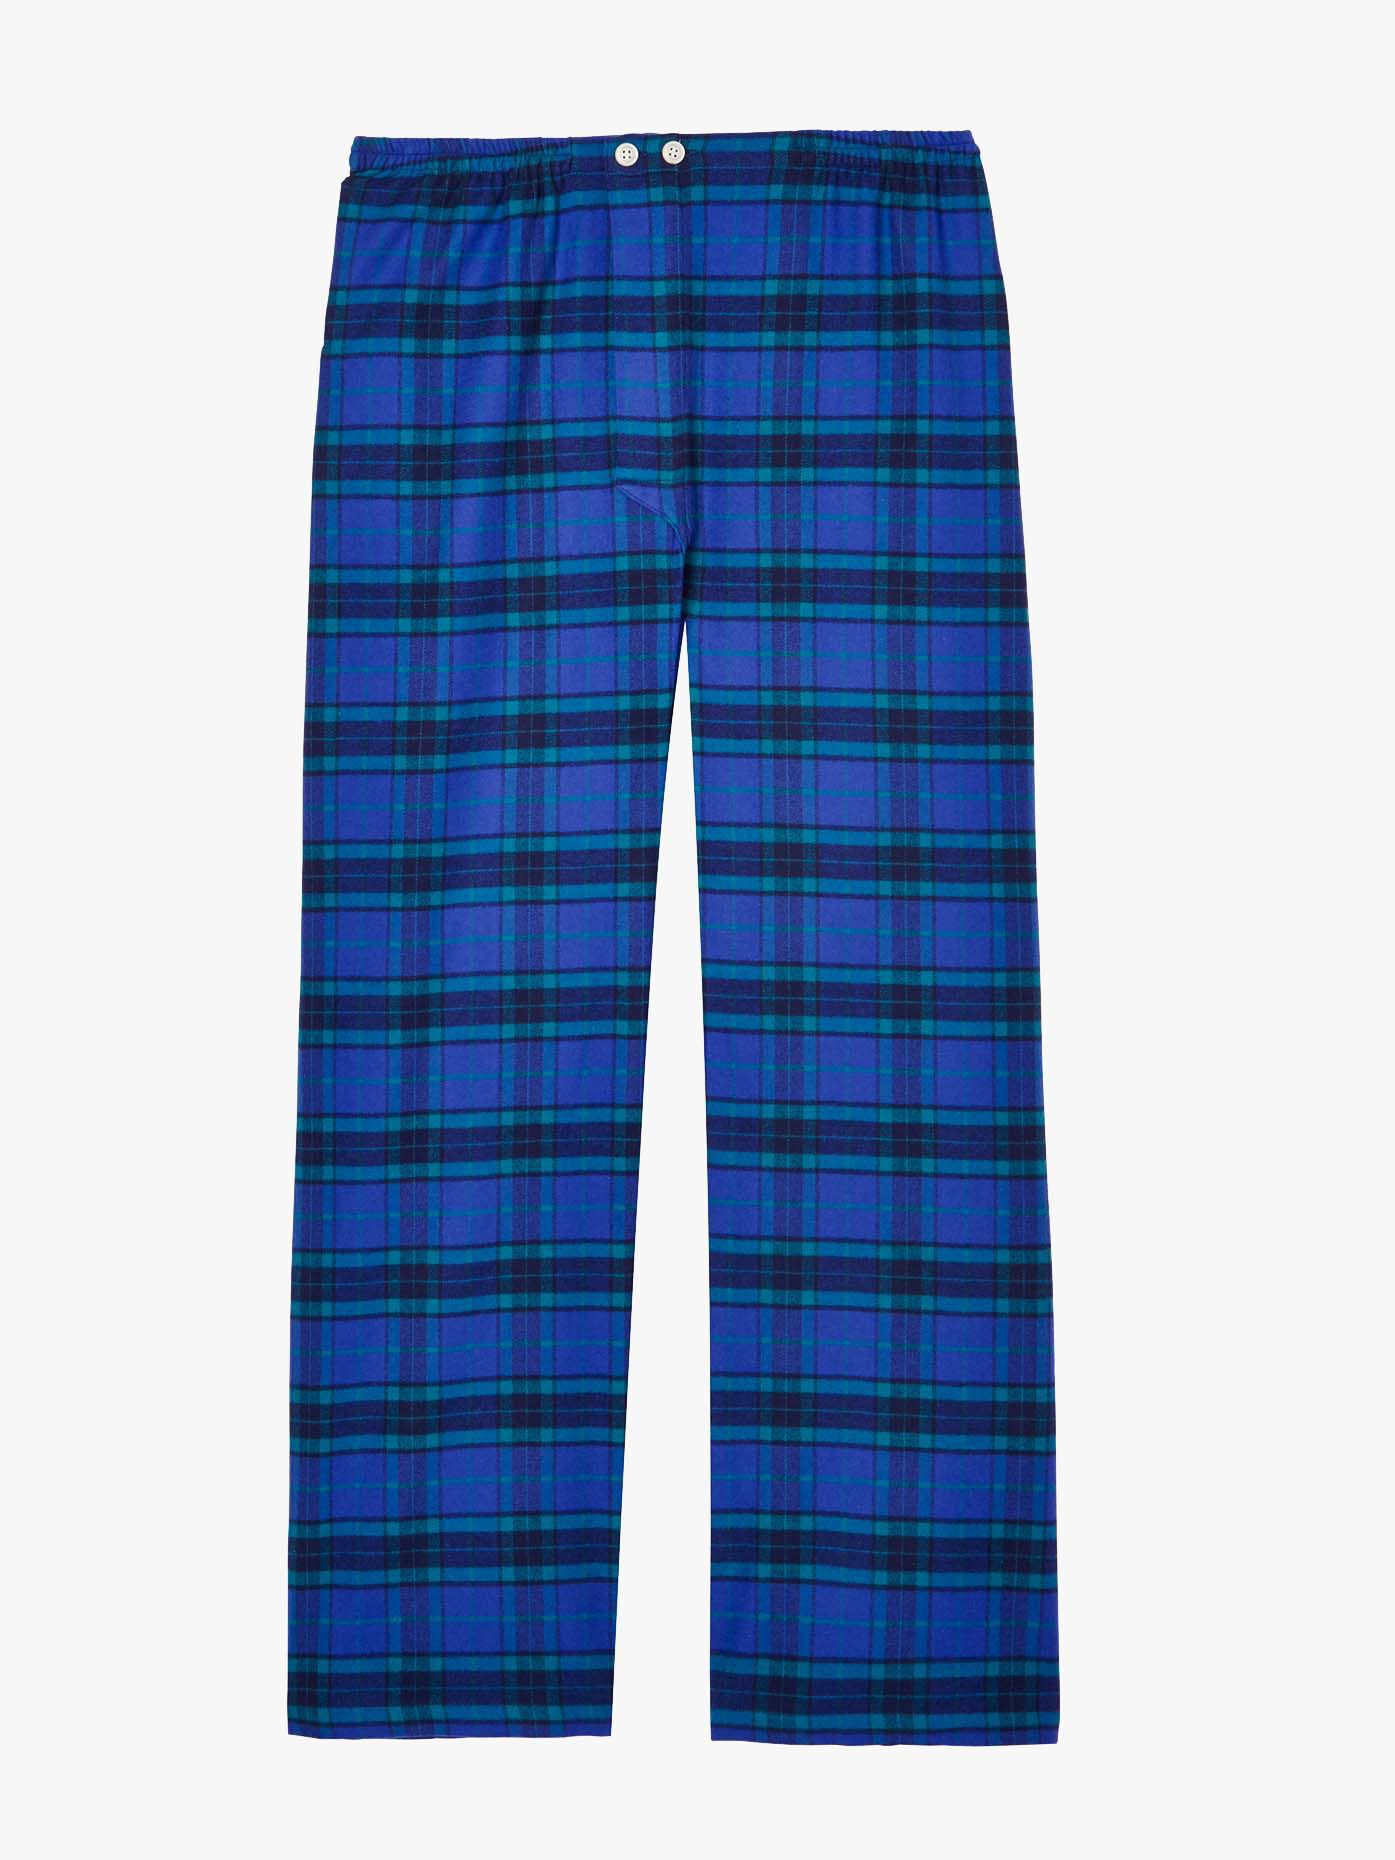 British Boxers Tartan Brushed Cotton Pyjama Set, Midnight Blue/Green, L